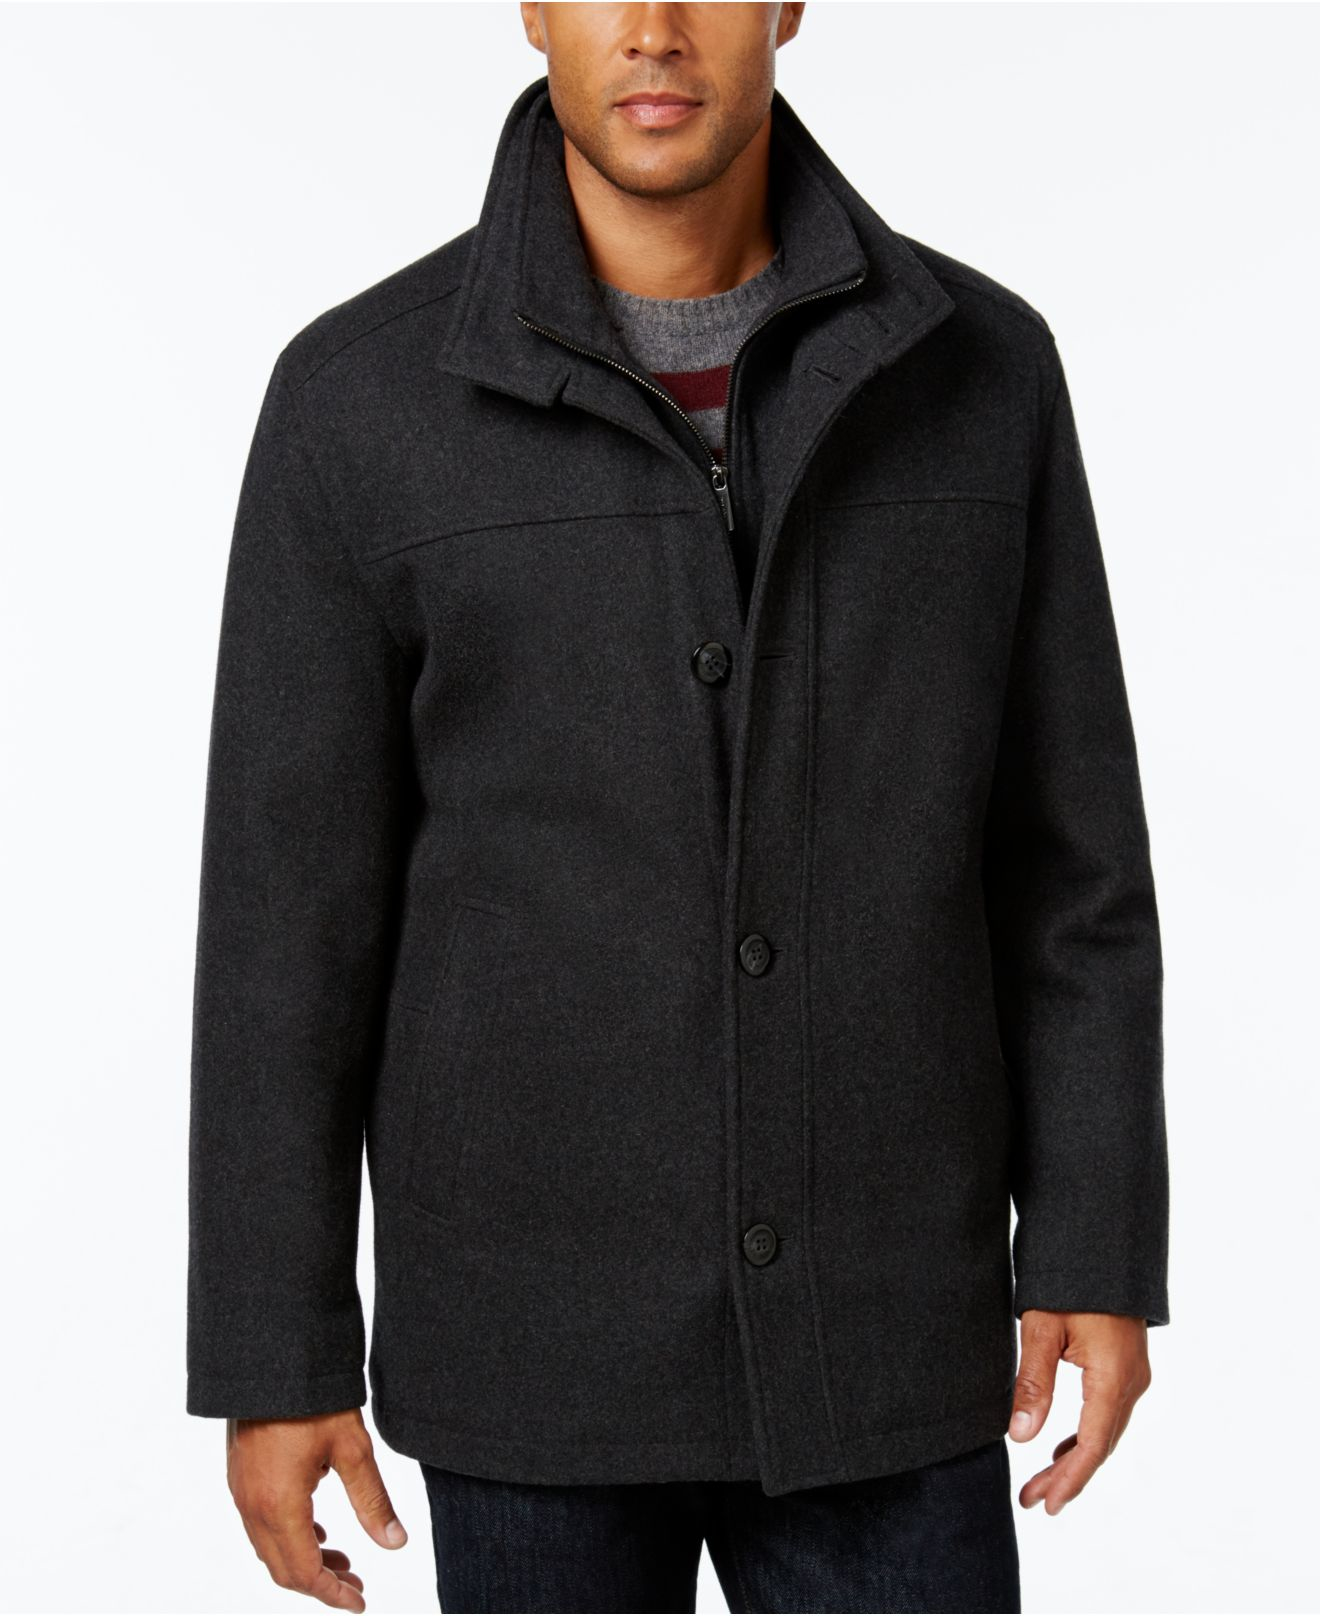 Hot Sale 2015 Fashion Brand Men Winter Jacket Stand Collar